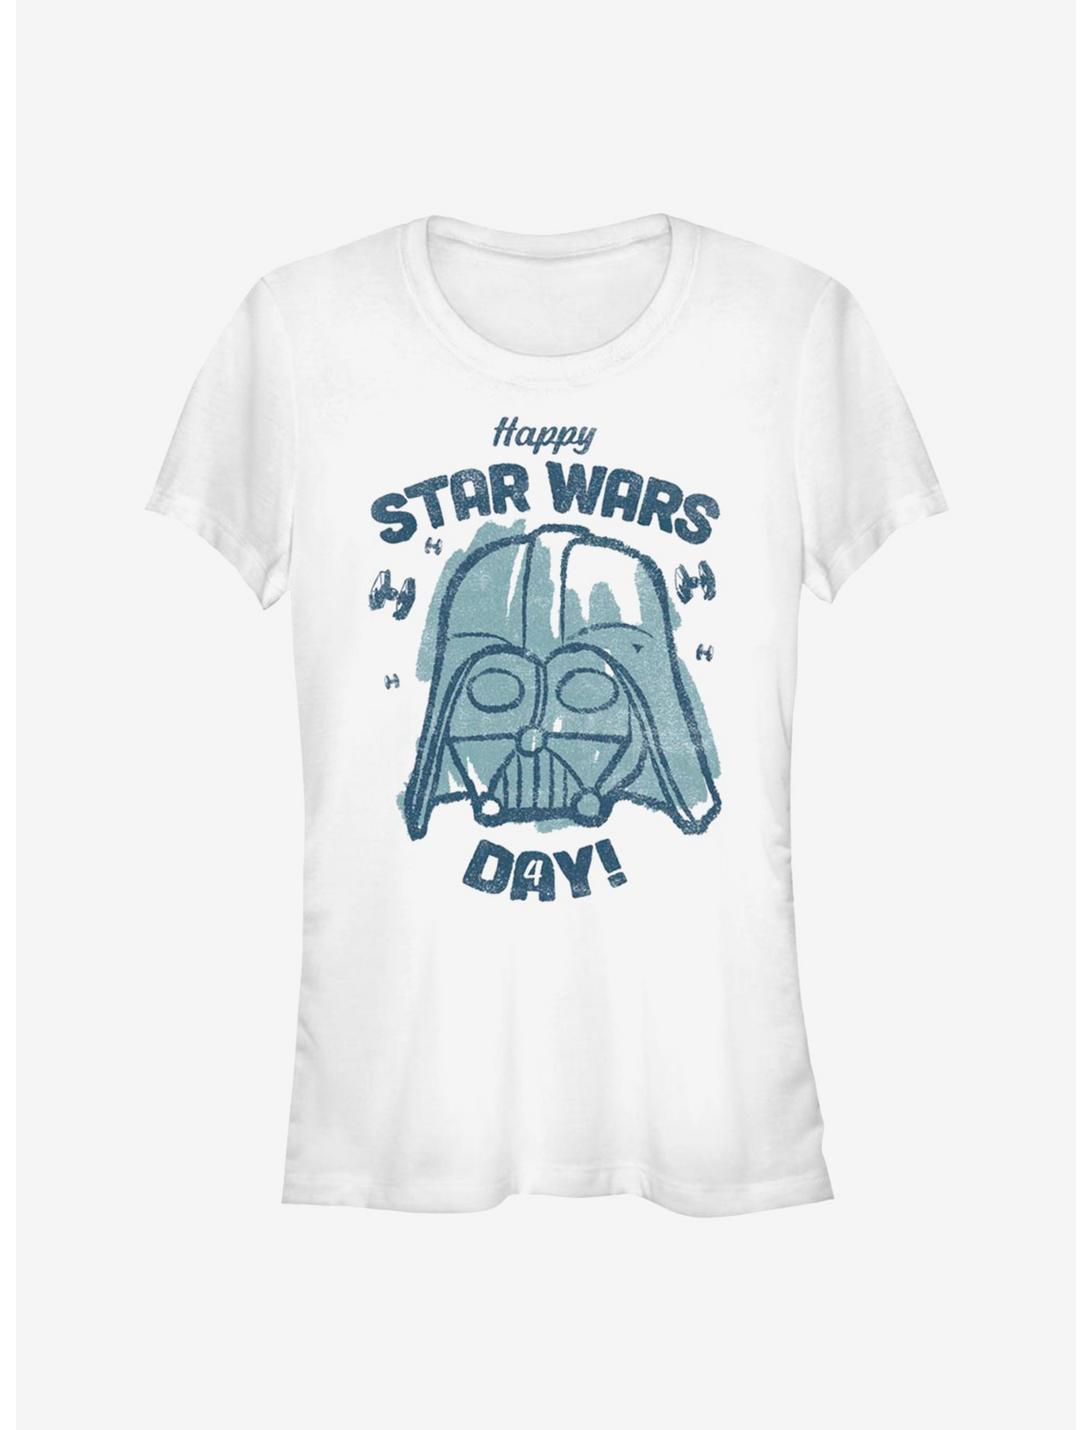 Star Wars Happy Star Wars Day Girls T-Shirt, WHITE, hi-res